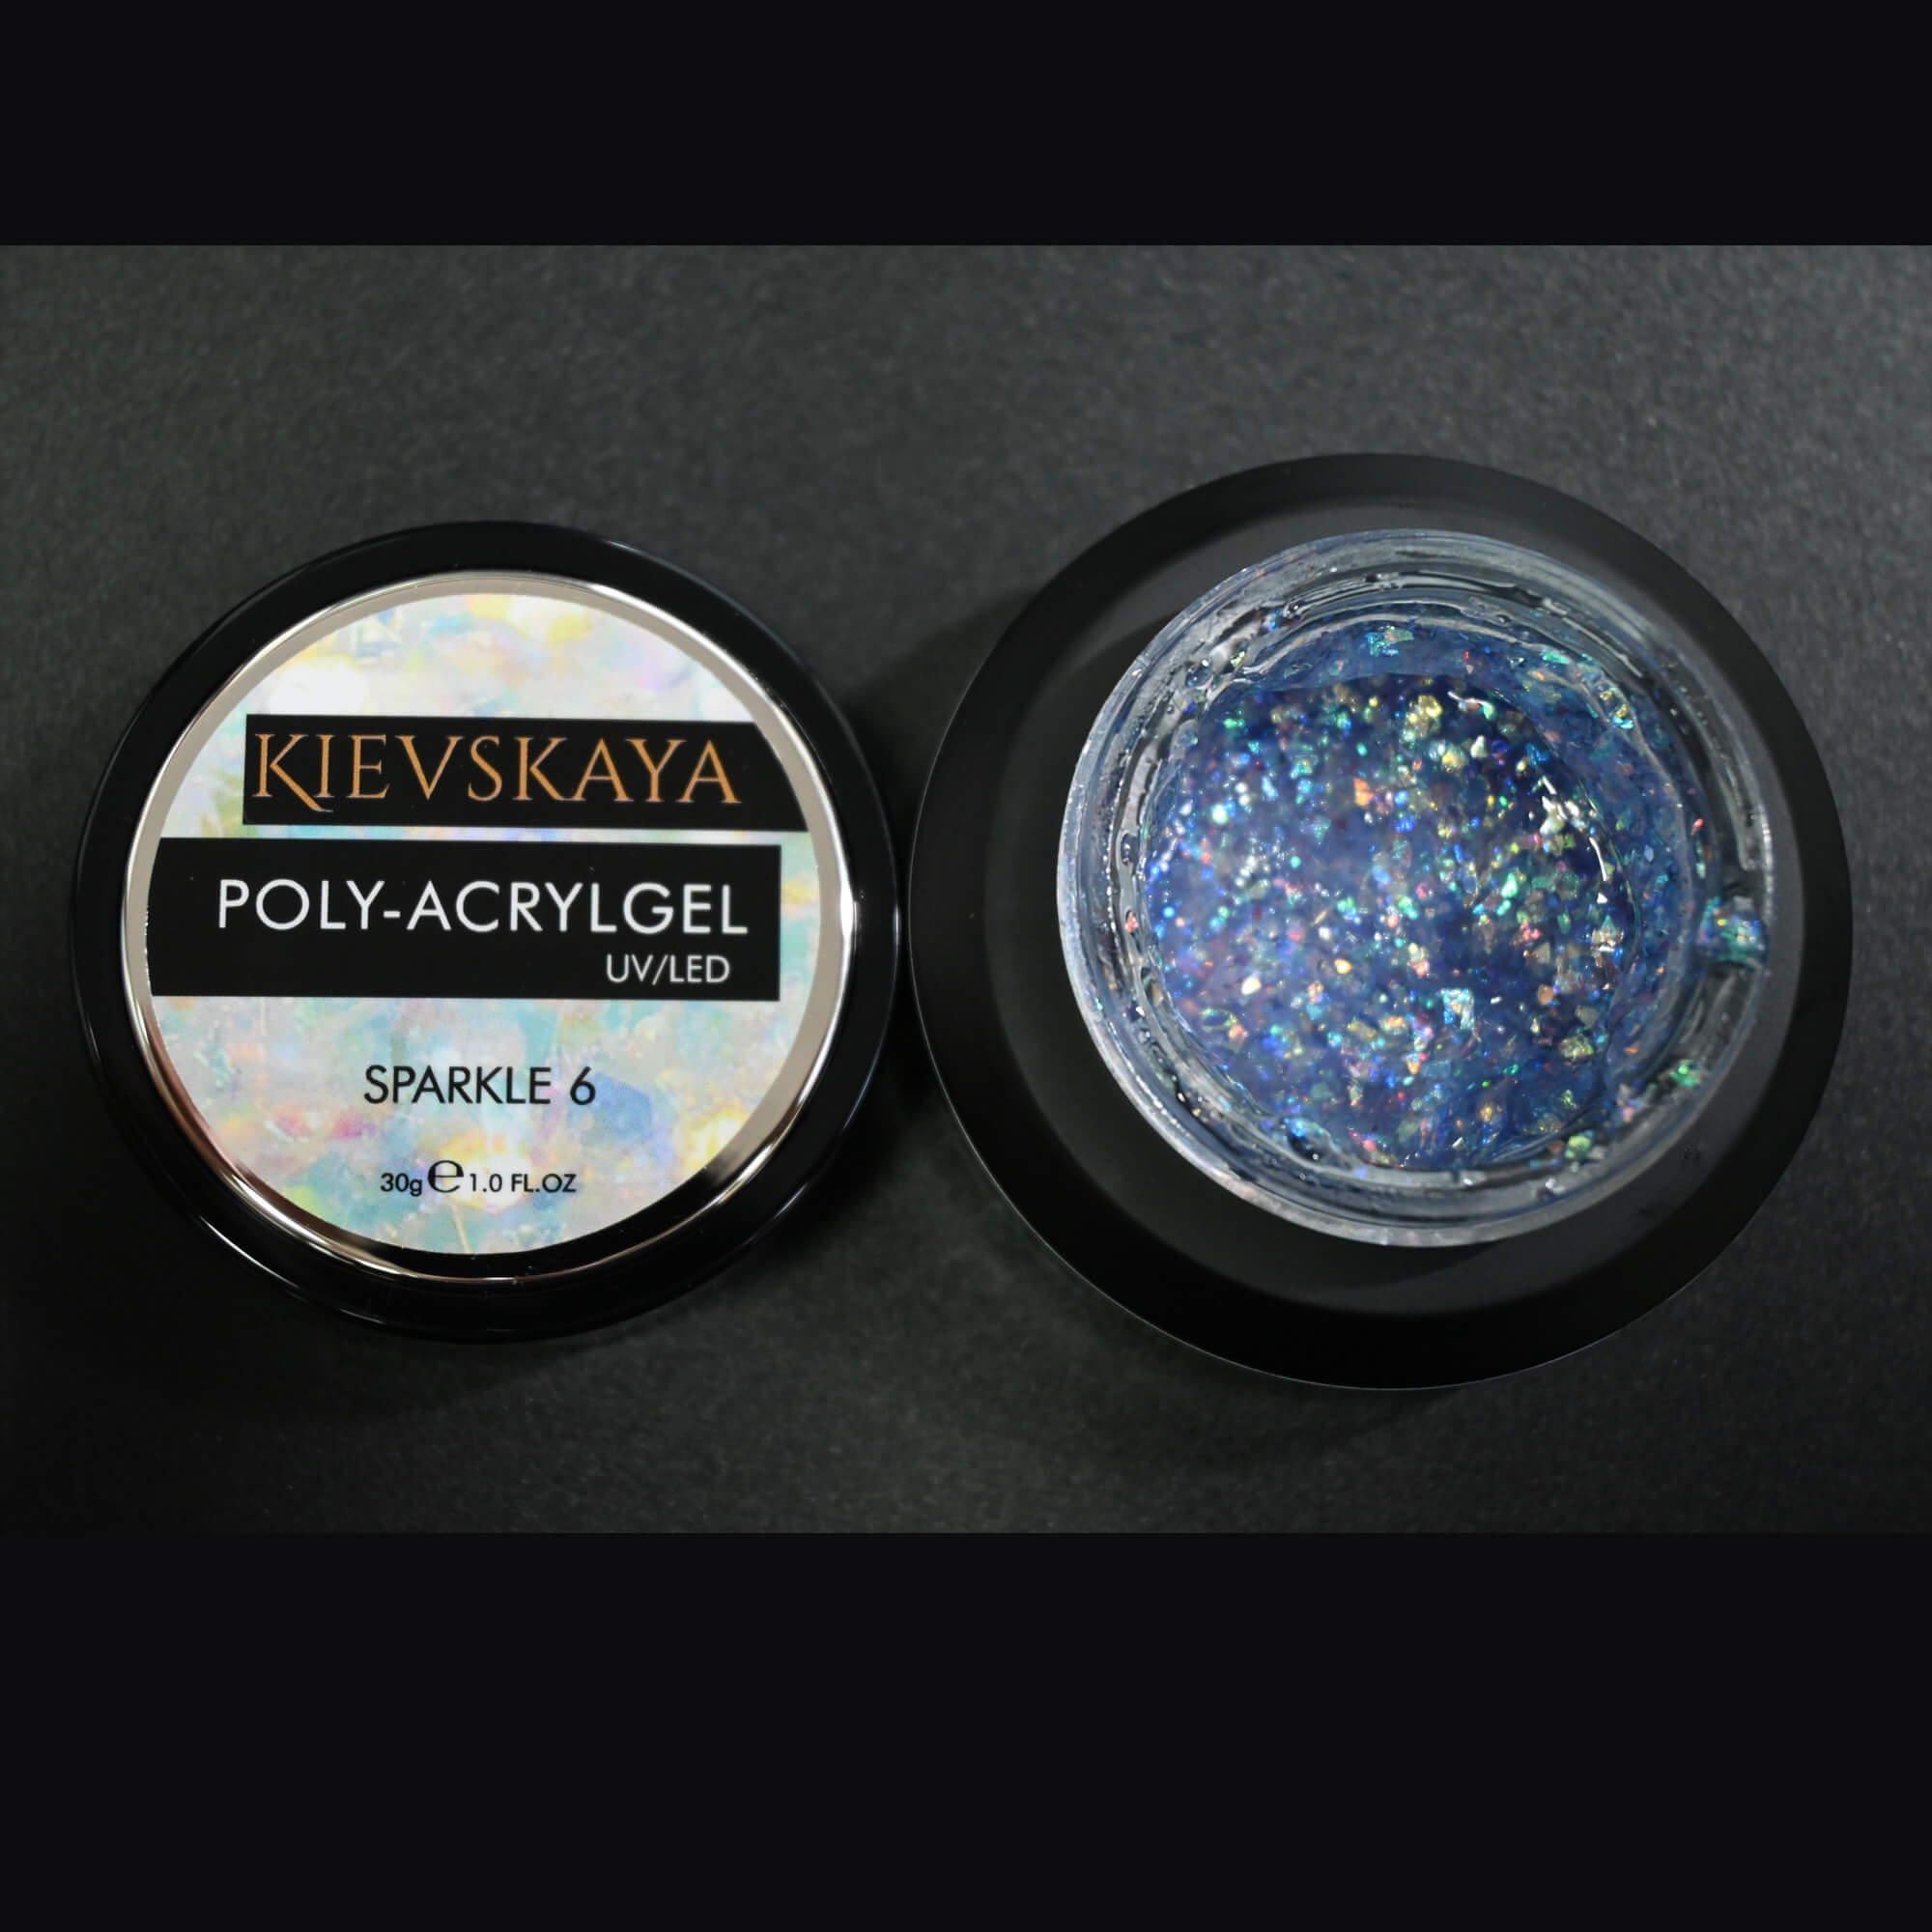 Poly-acrylgel Sparkle Kievskaya 30gr-sparkle06 - Sparkle06 - Everin.ro